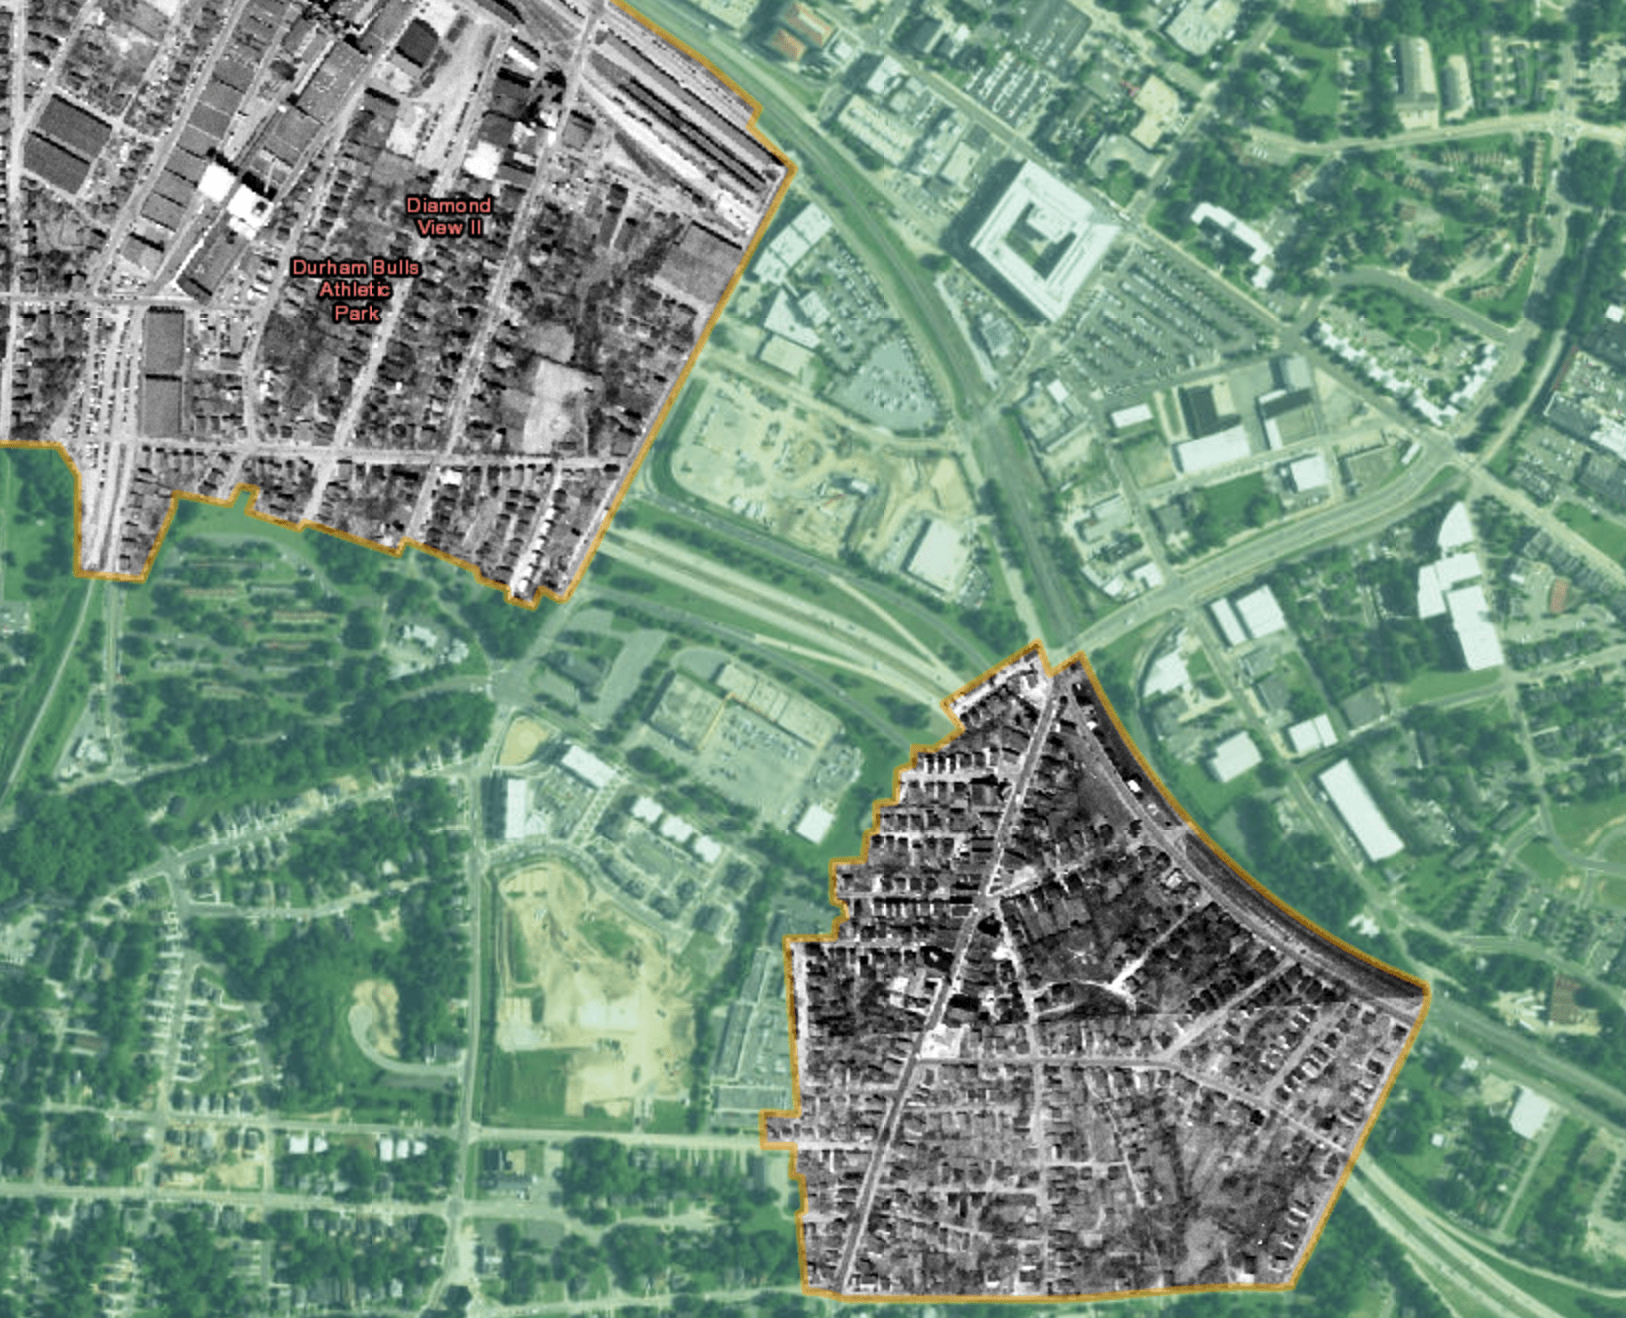 Map showing 1955 aerial photographs of Hayti neighborhood of Durham, North Carolina